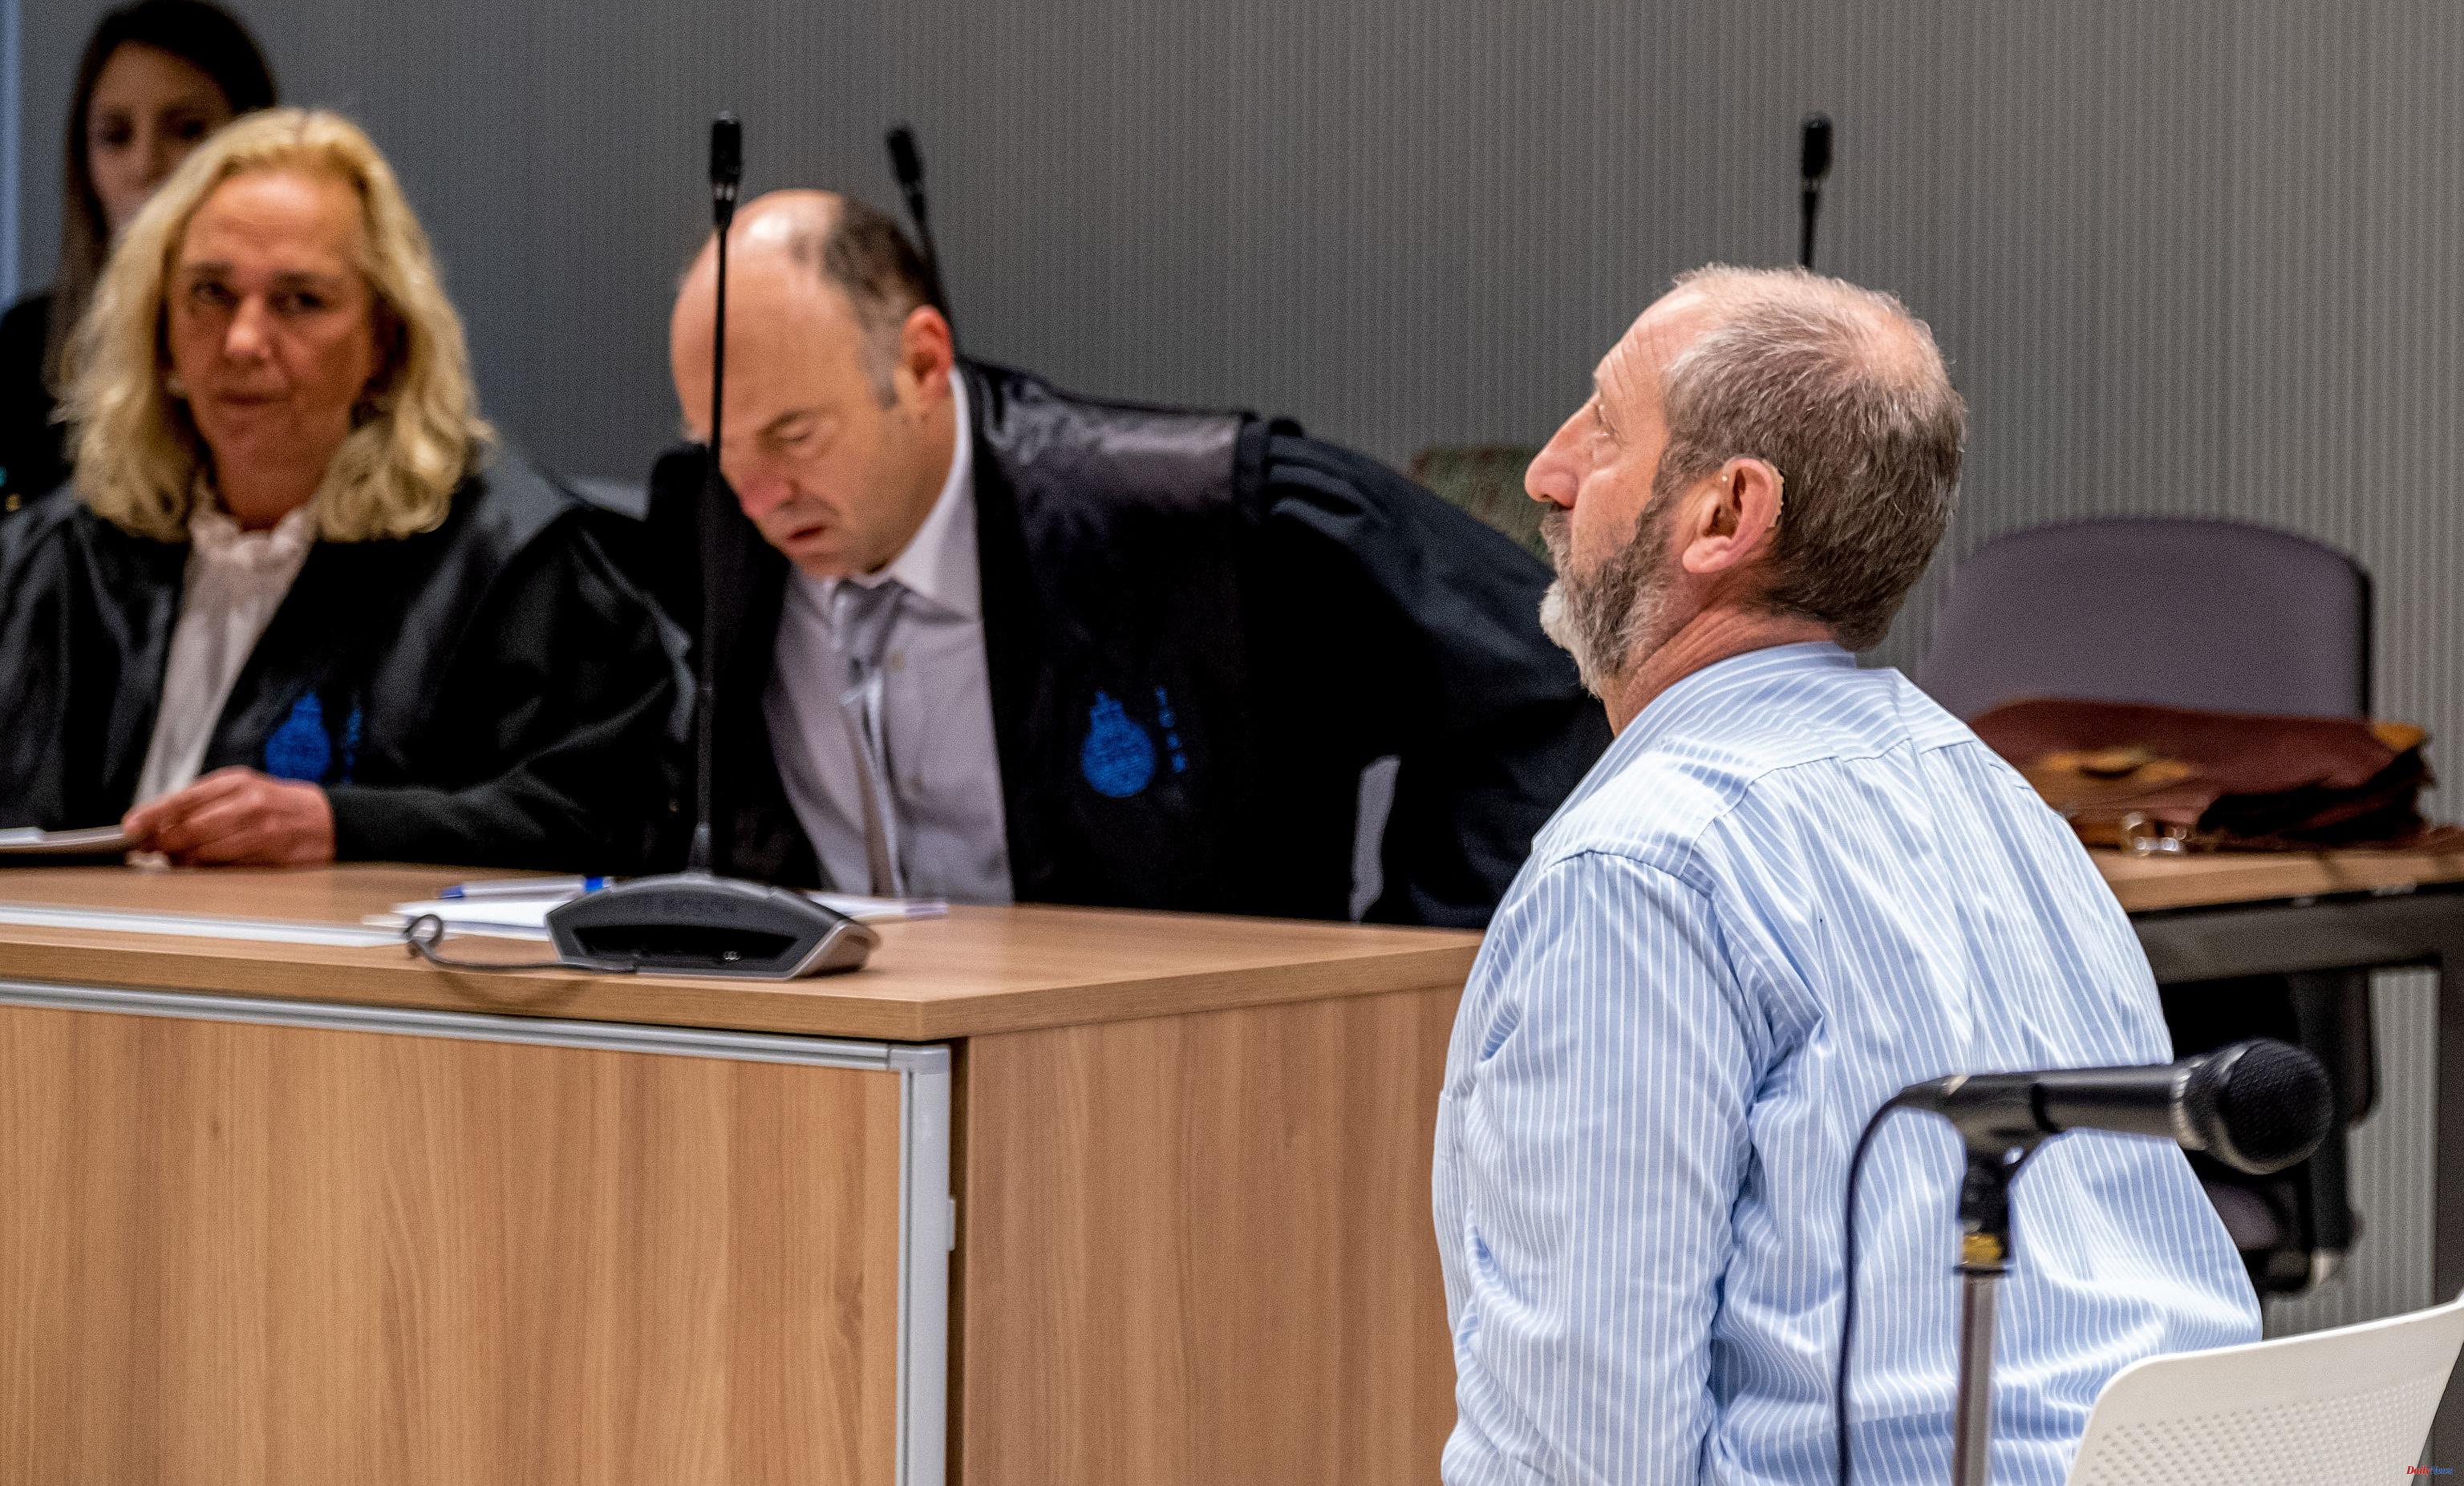 VERDICT The jury finds Almeida guilty of the murder of Álex, Lardero's child